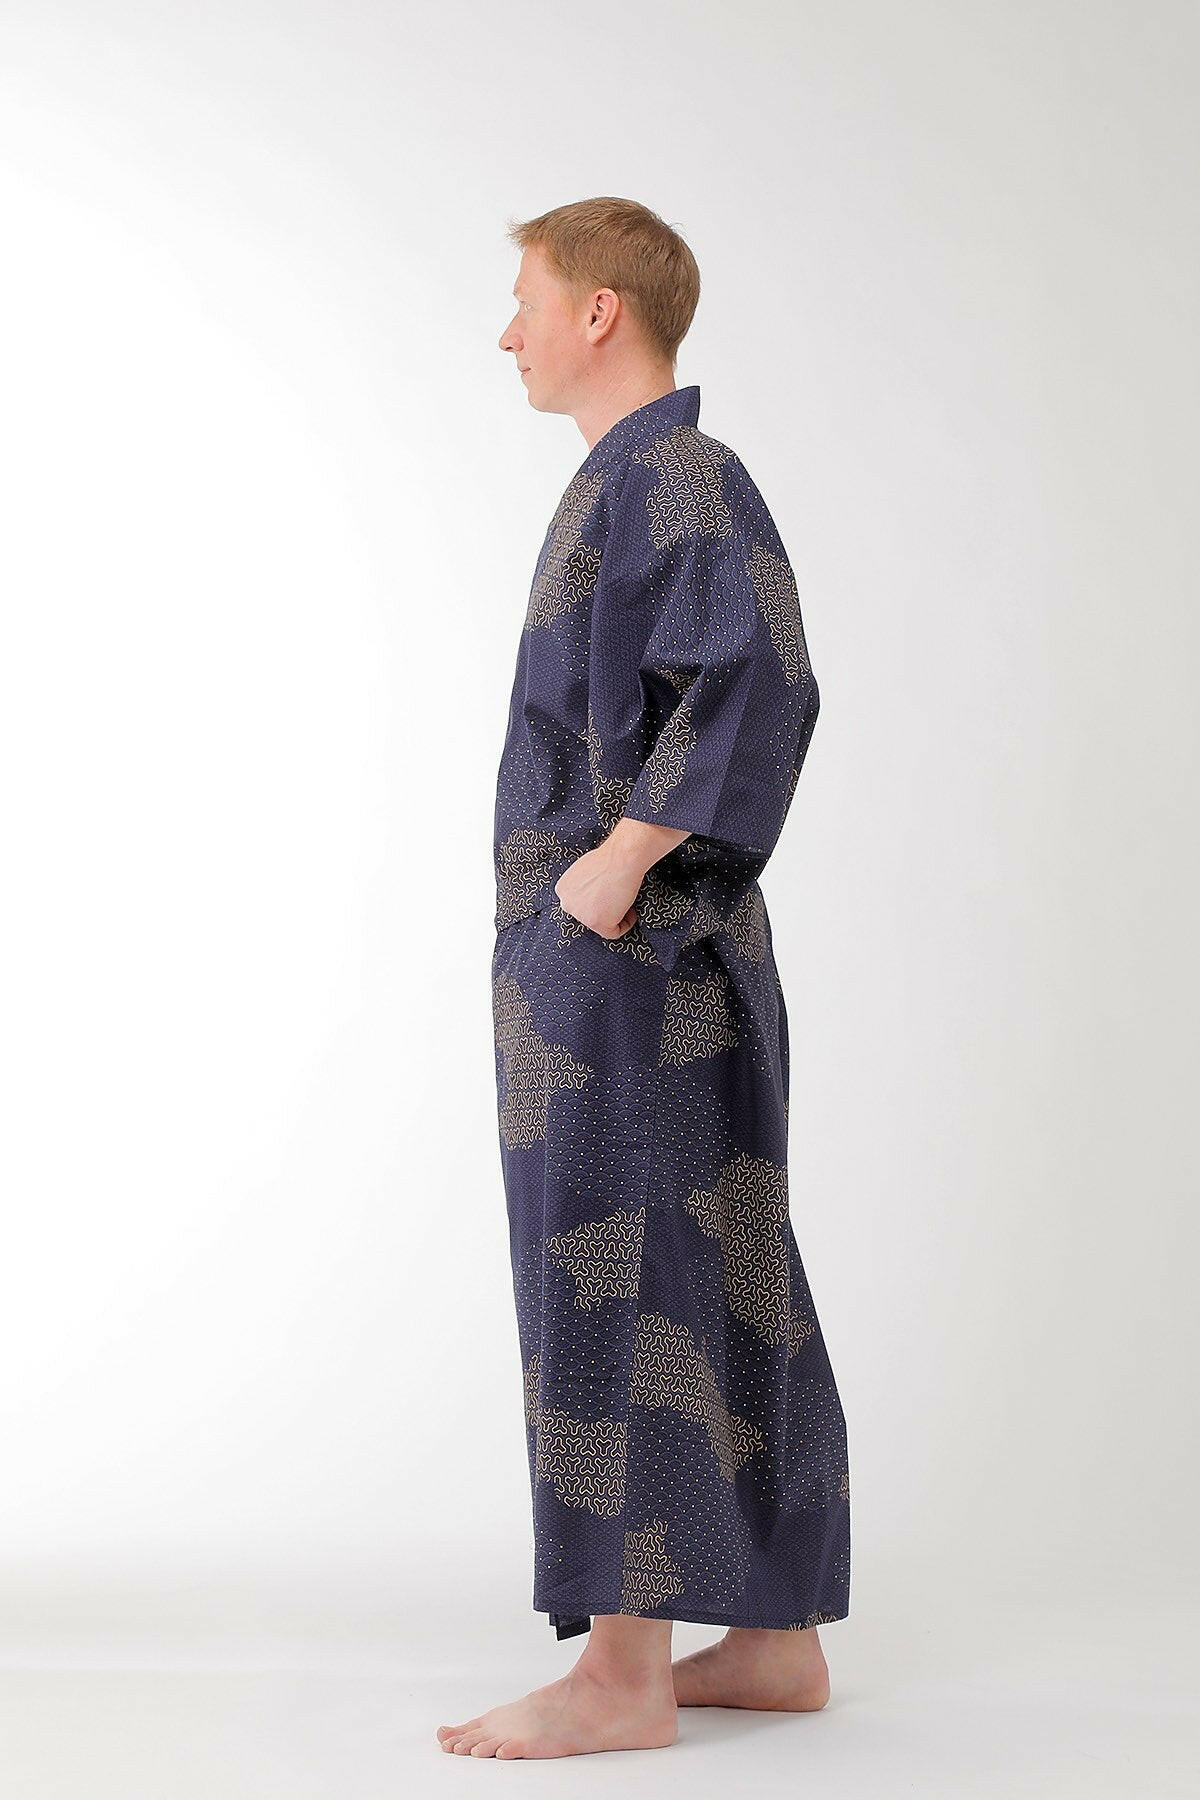 Kimono Robe for men, Japanese yukata | Kimono | Yukata – Beautiful Robes